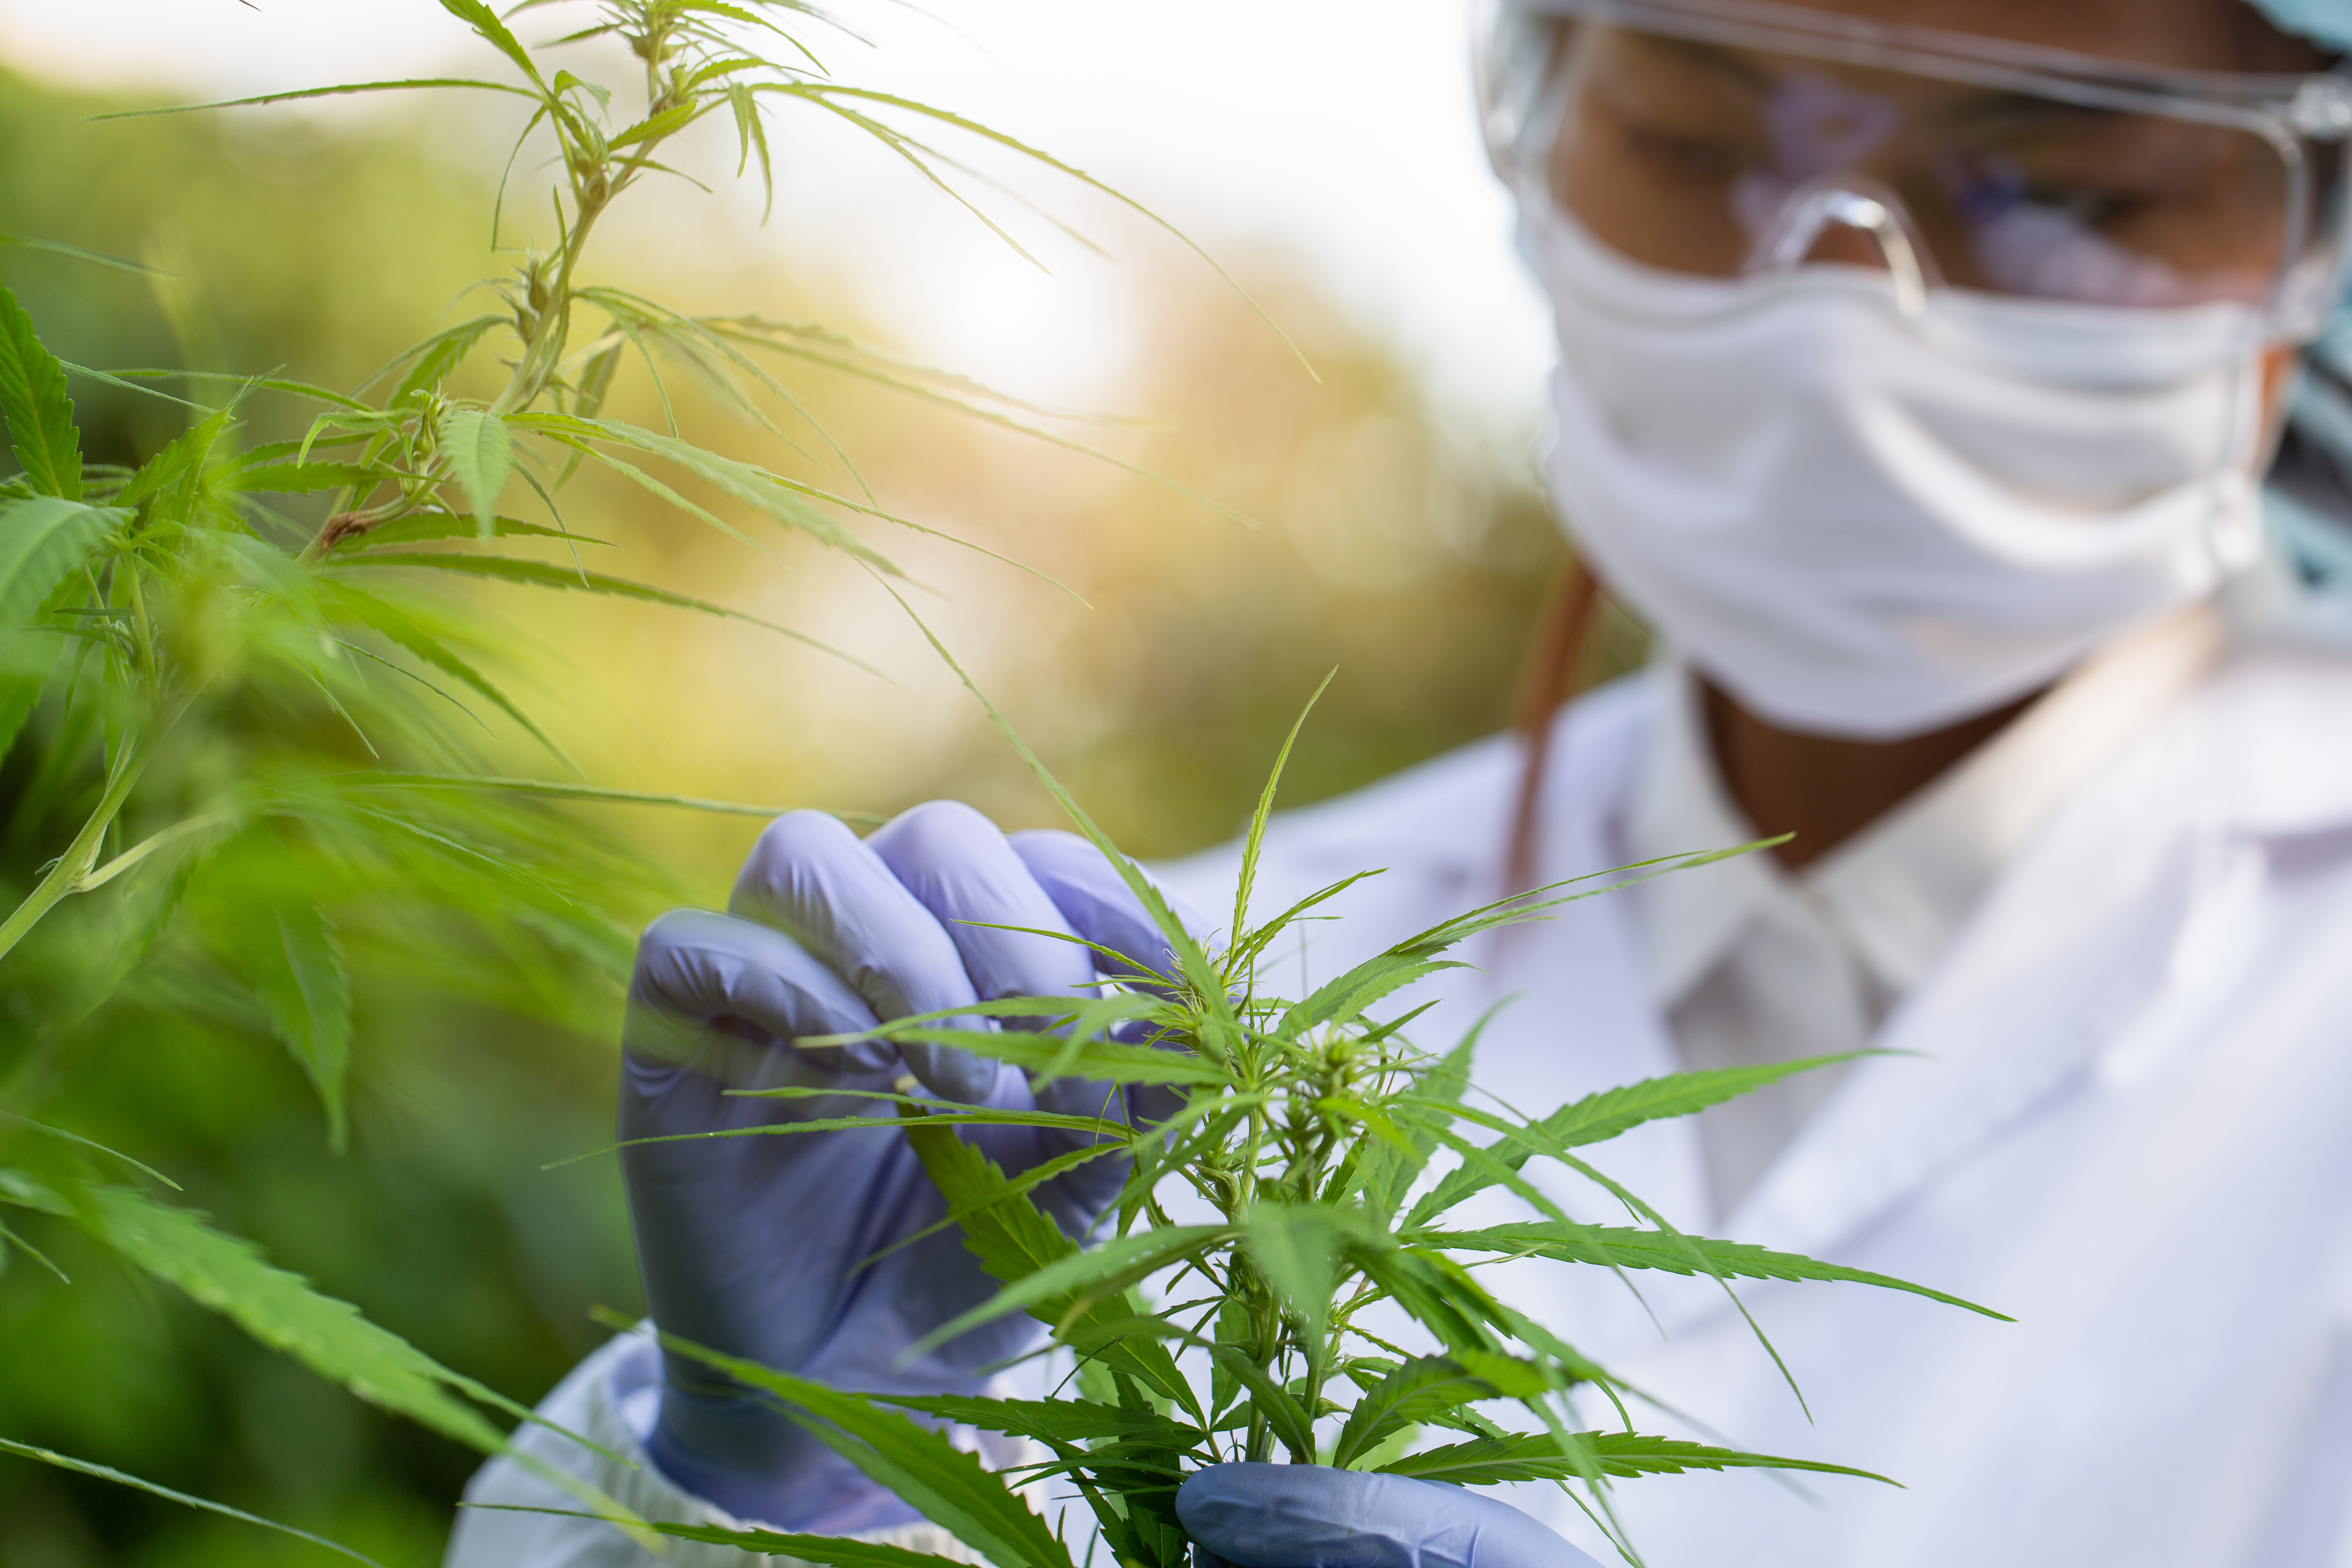 a masked person examining a cannabis plant